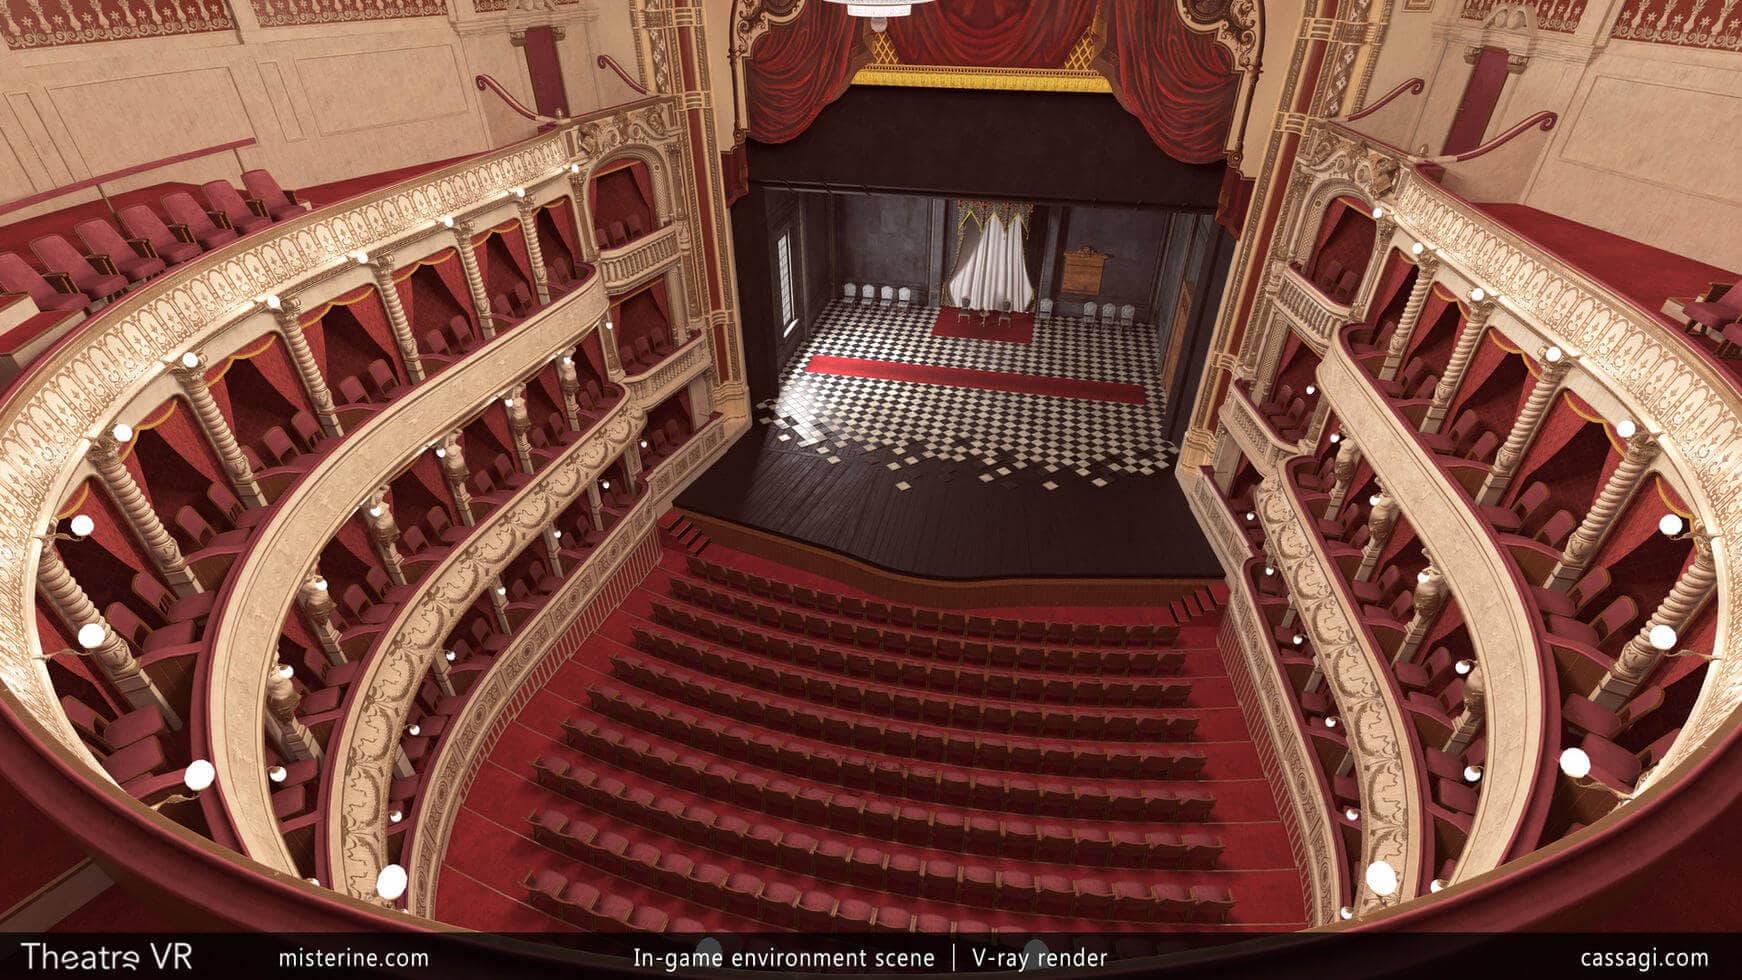 Theatre VR interior game environment